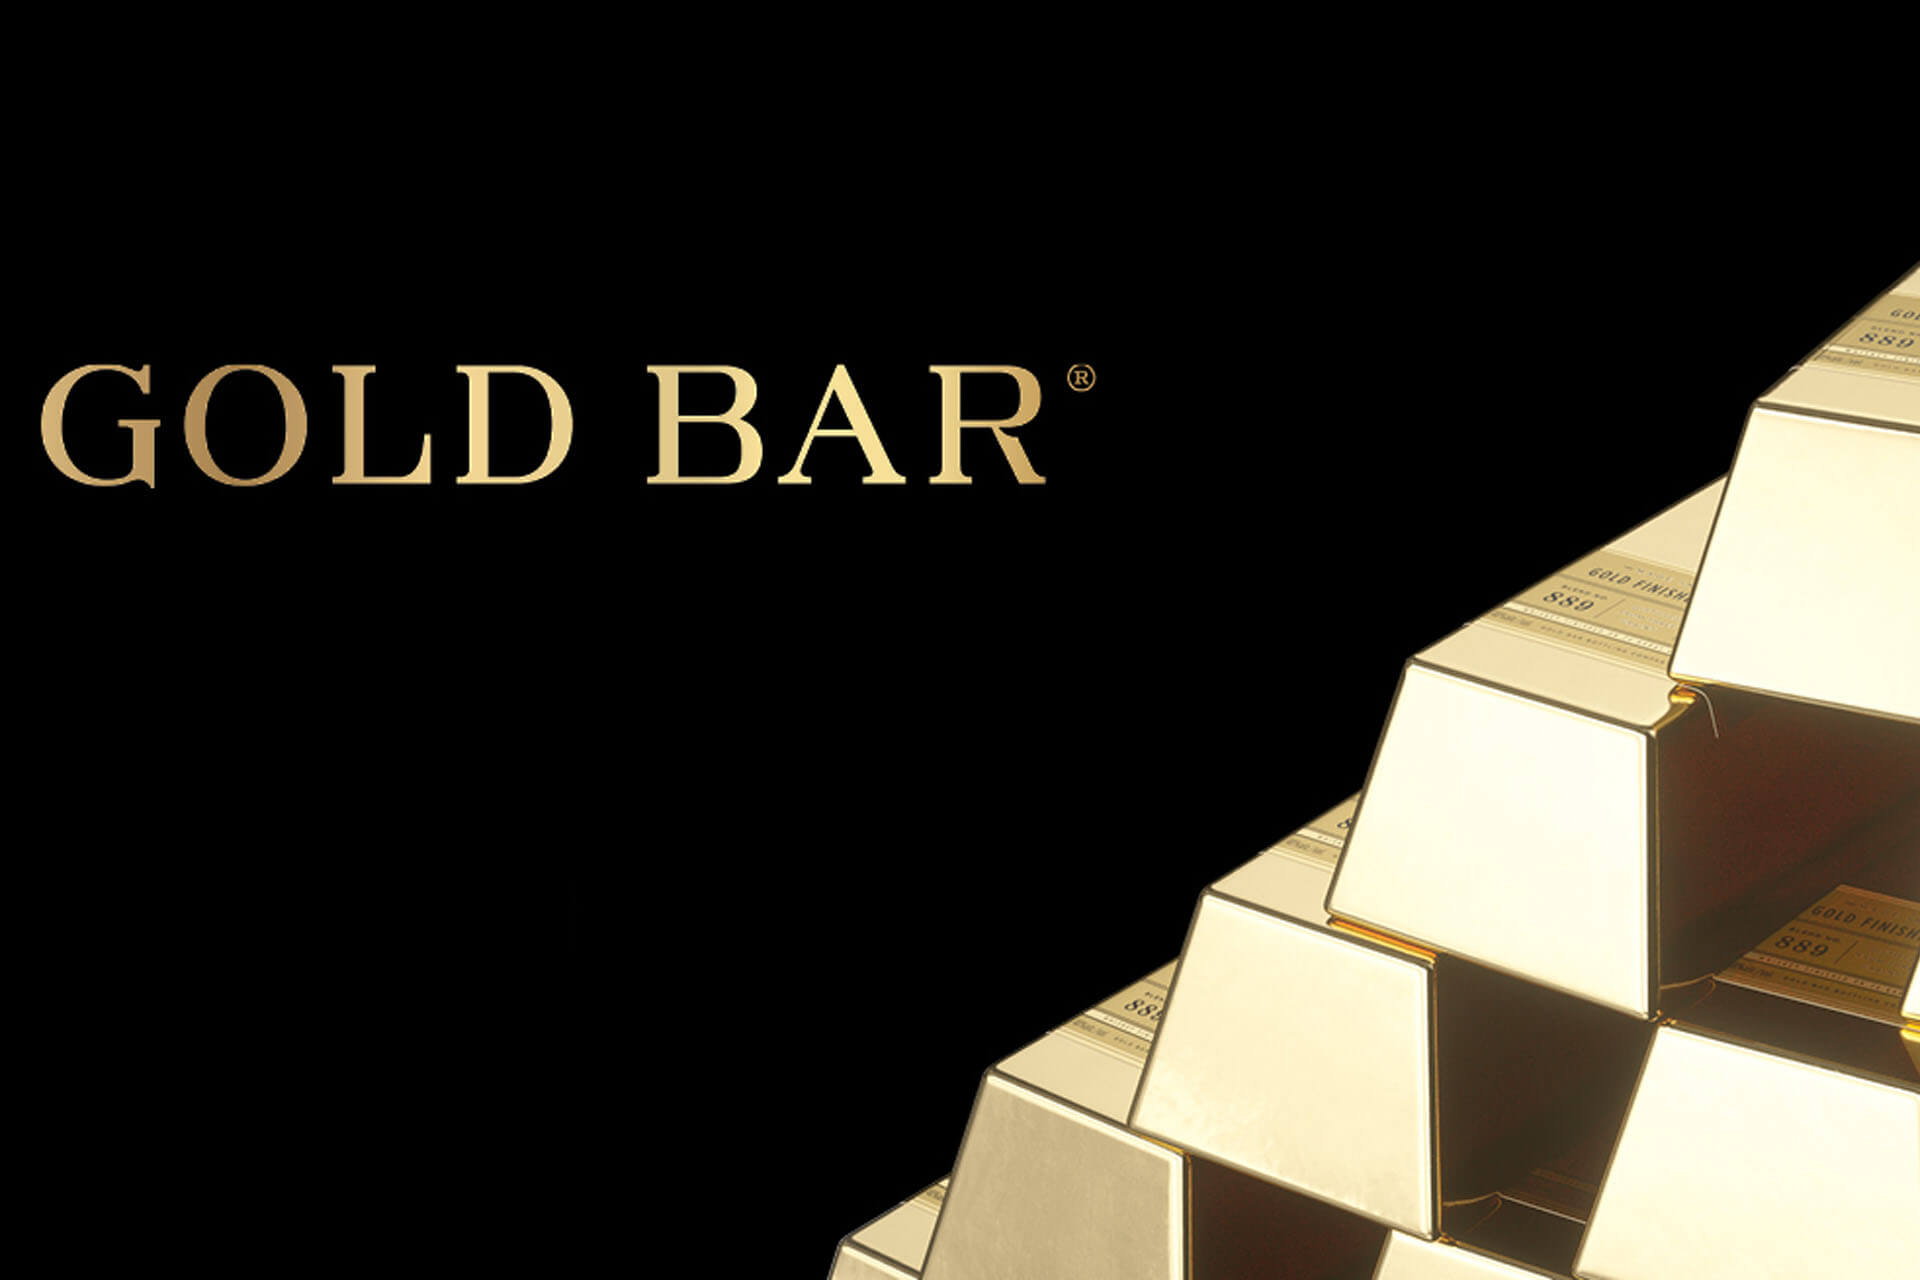 Gold Bar Whiskey